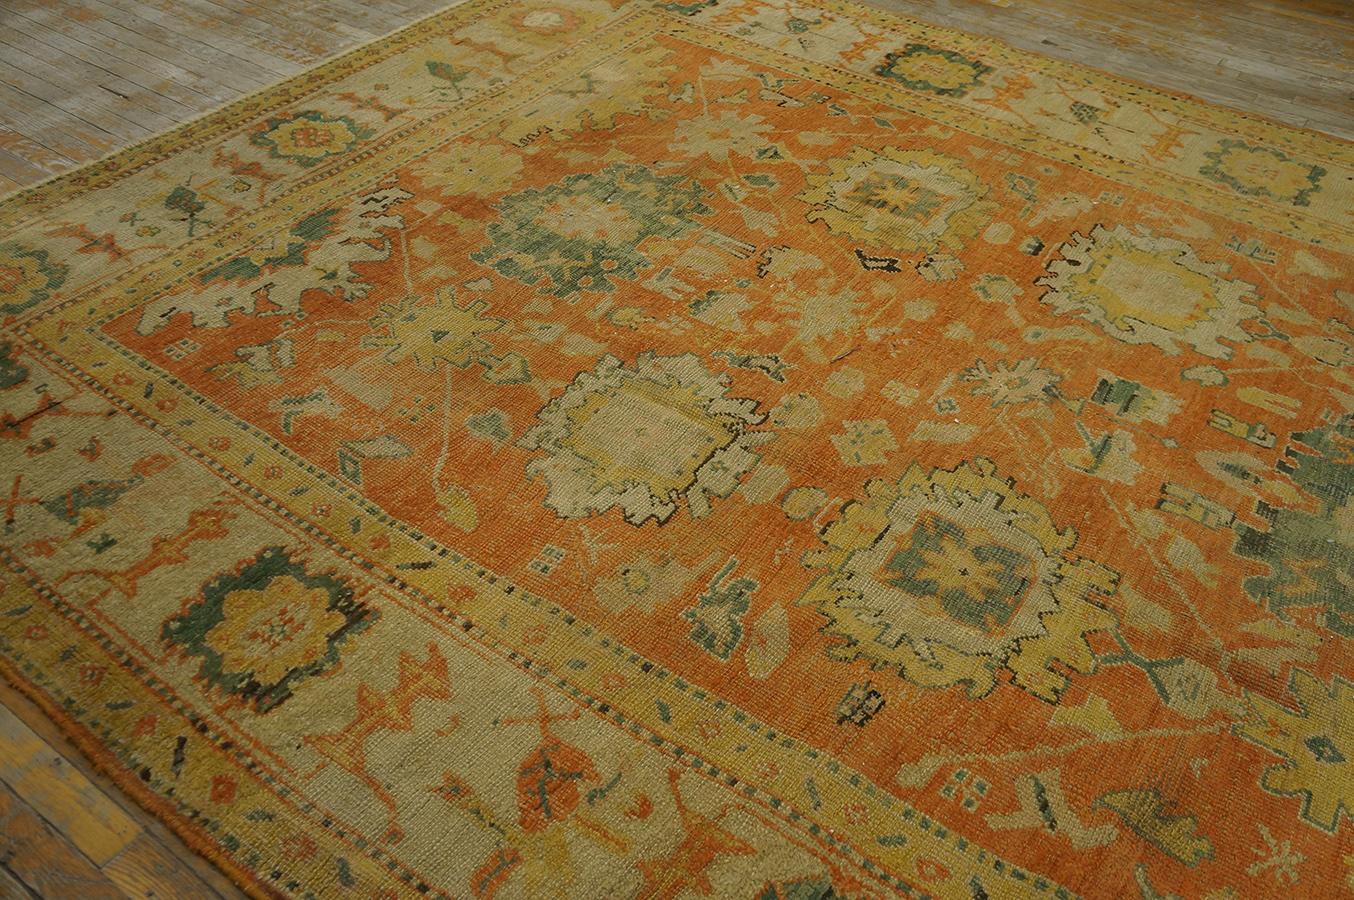 Late 19th Century Turkish Anatolian Oushak Carpet (8'4''x 11'2'' - 254 x 340 cm) For Sale 8